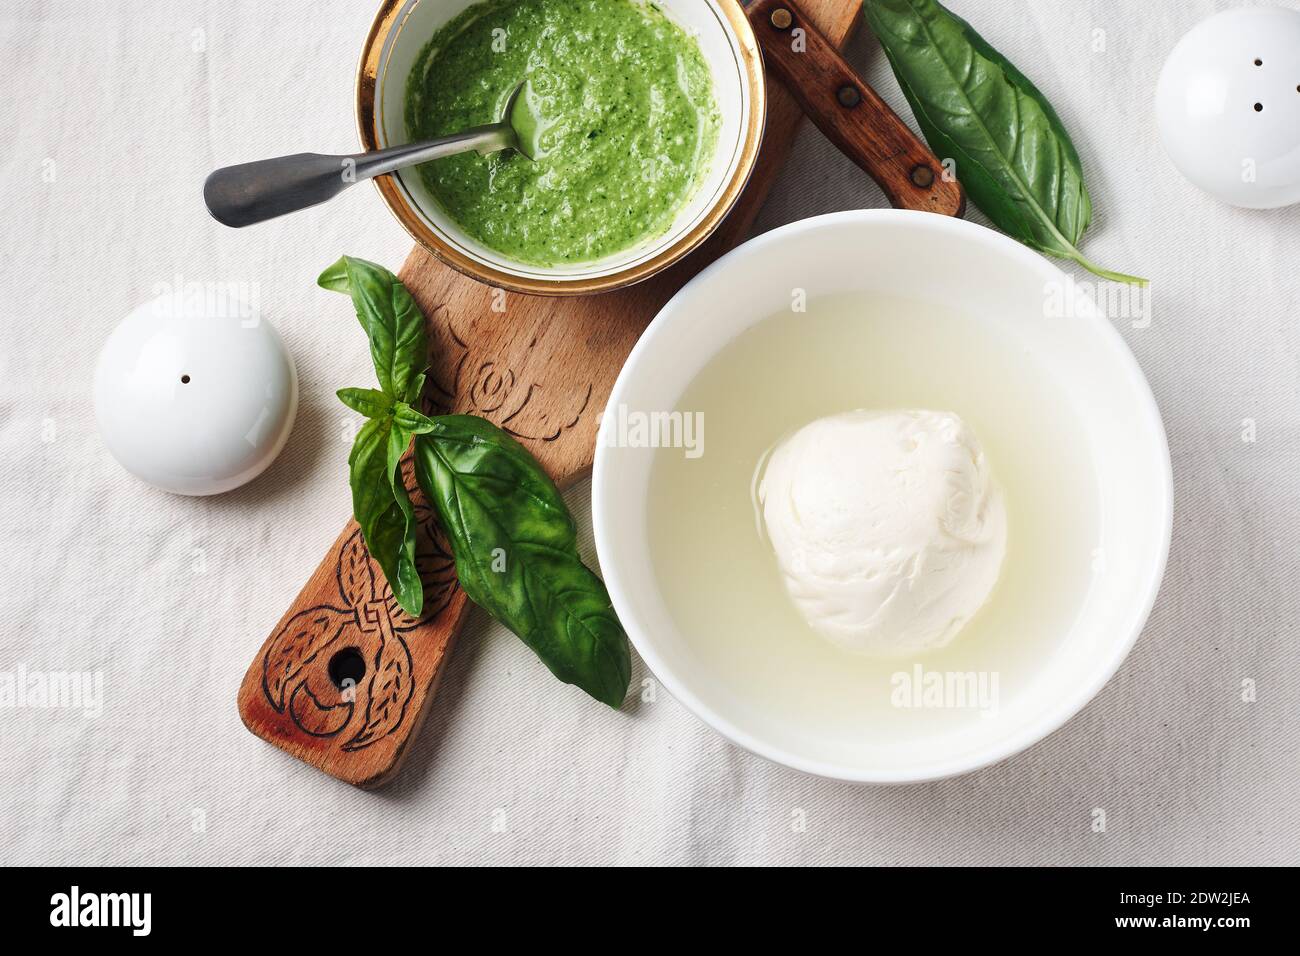 Mozzarella cheese ball in a bowl, pesto sauce and fresh basil leaves. Stock Photo